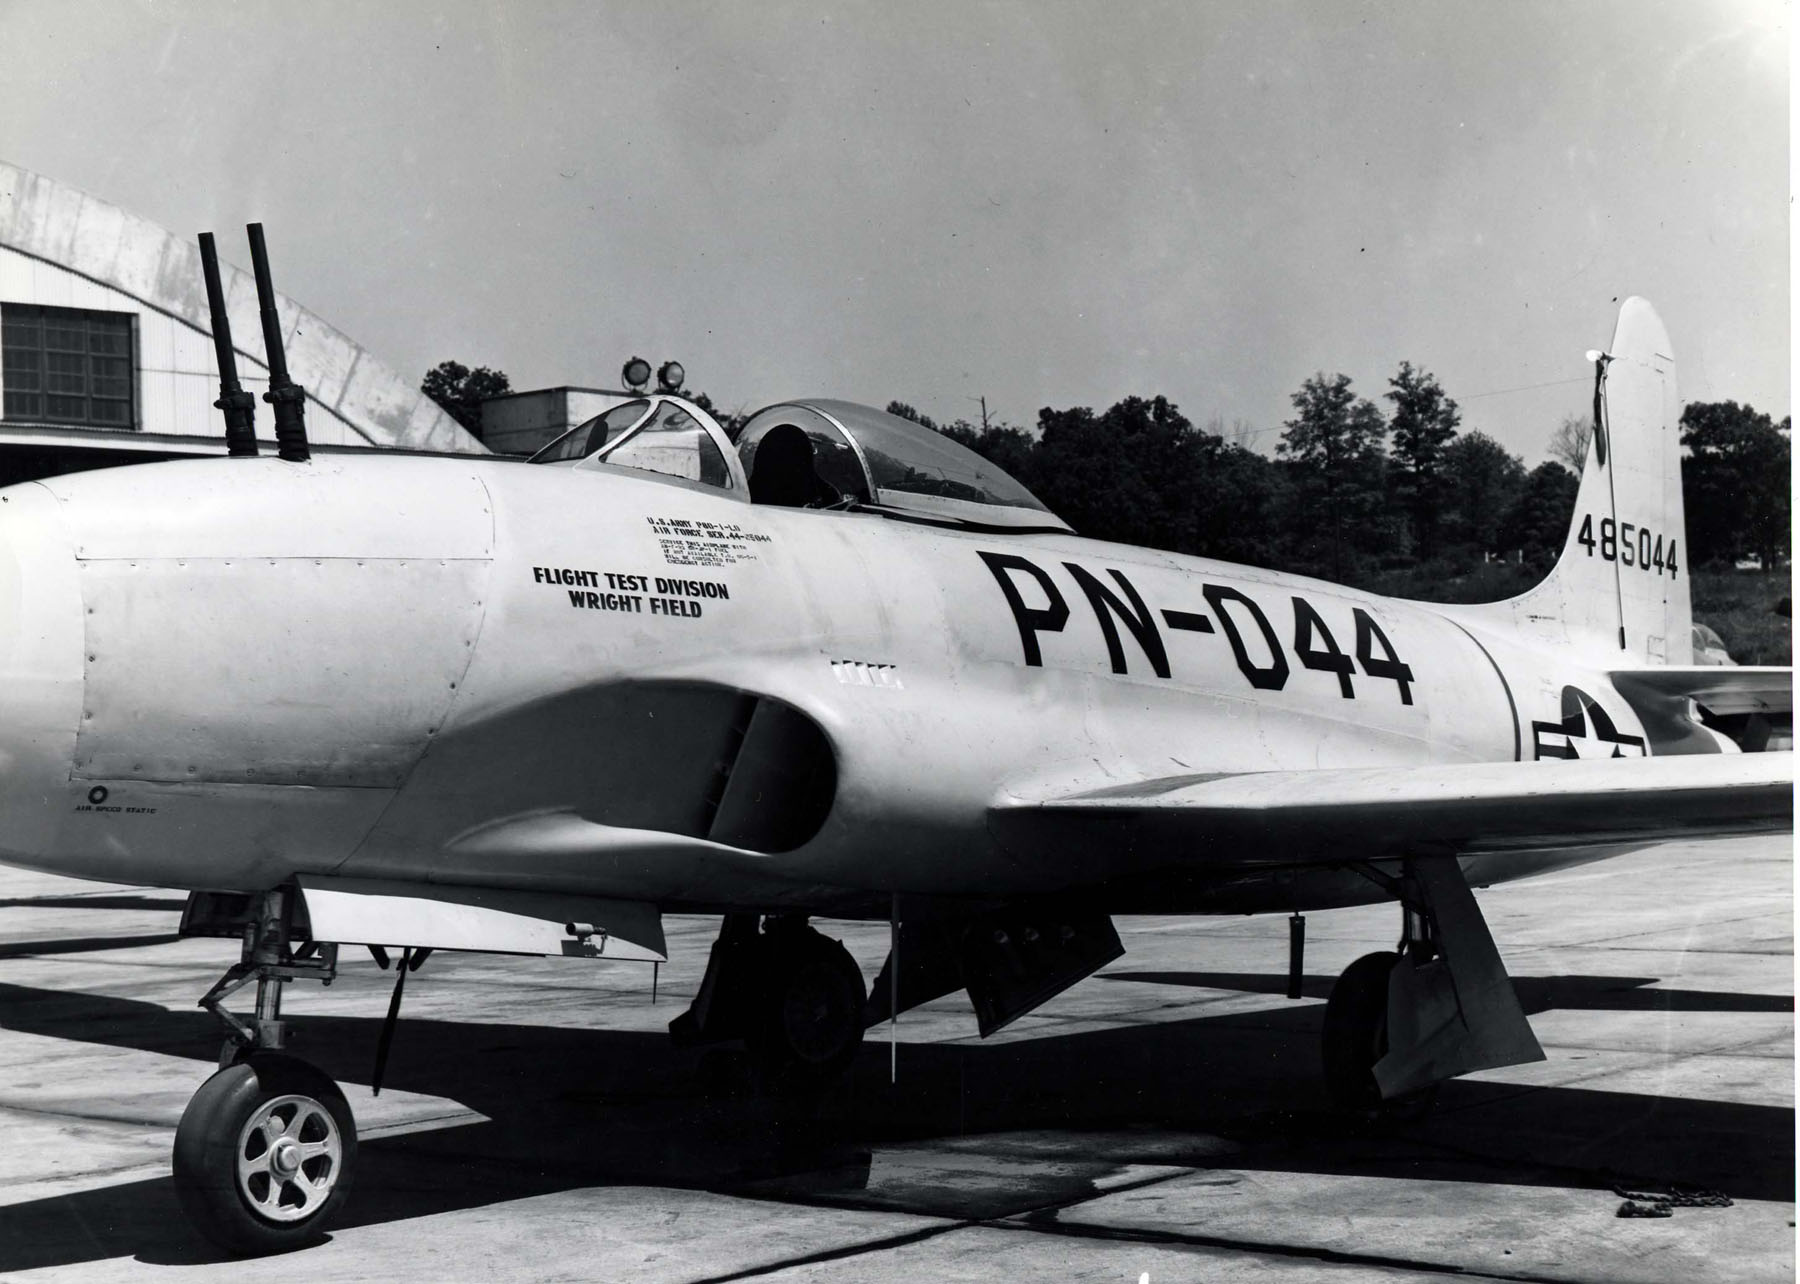 Lockheed P-80A Shooting Star angled gun test.jpg